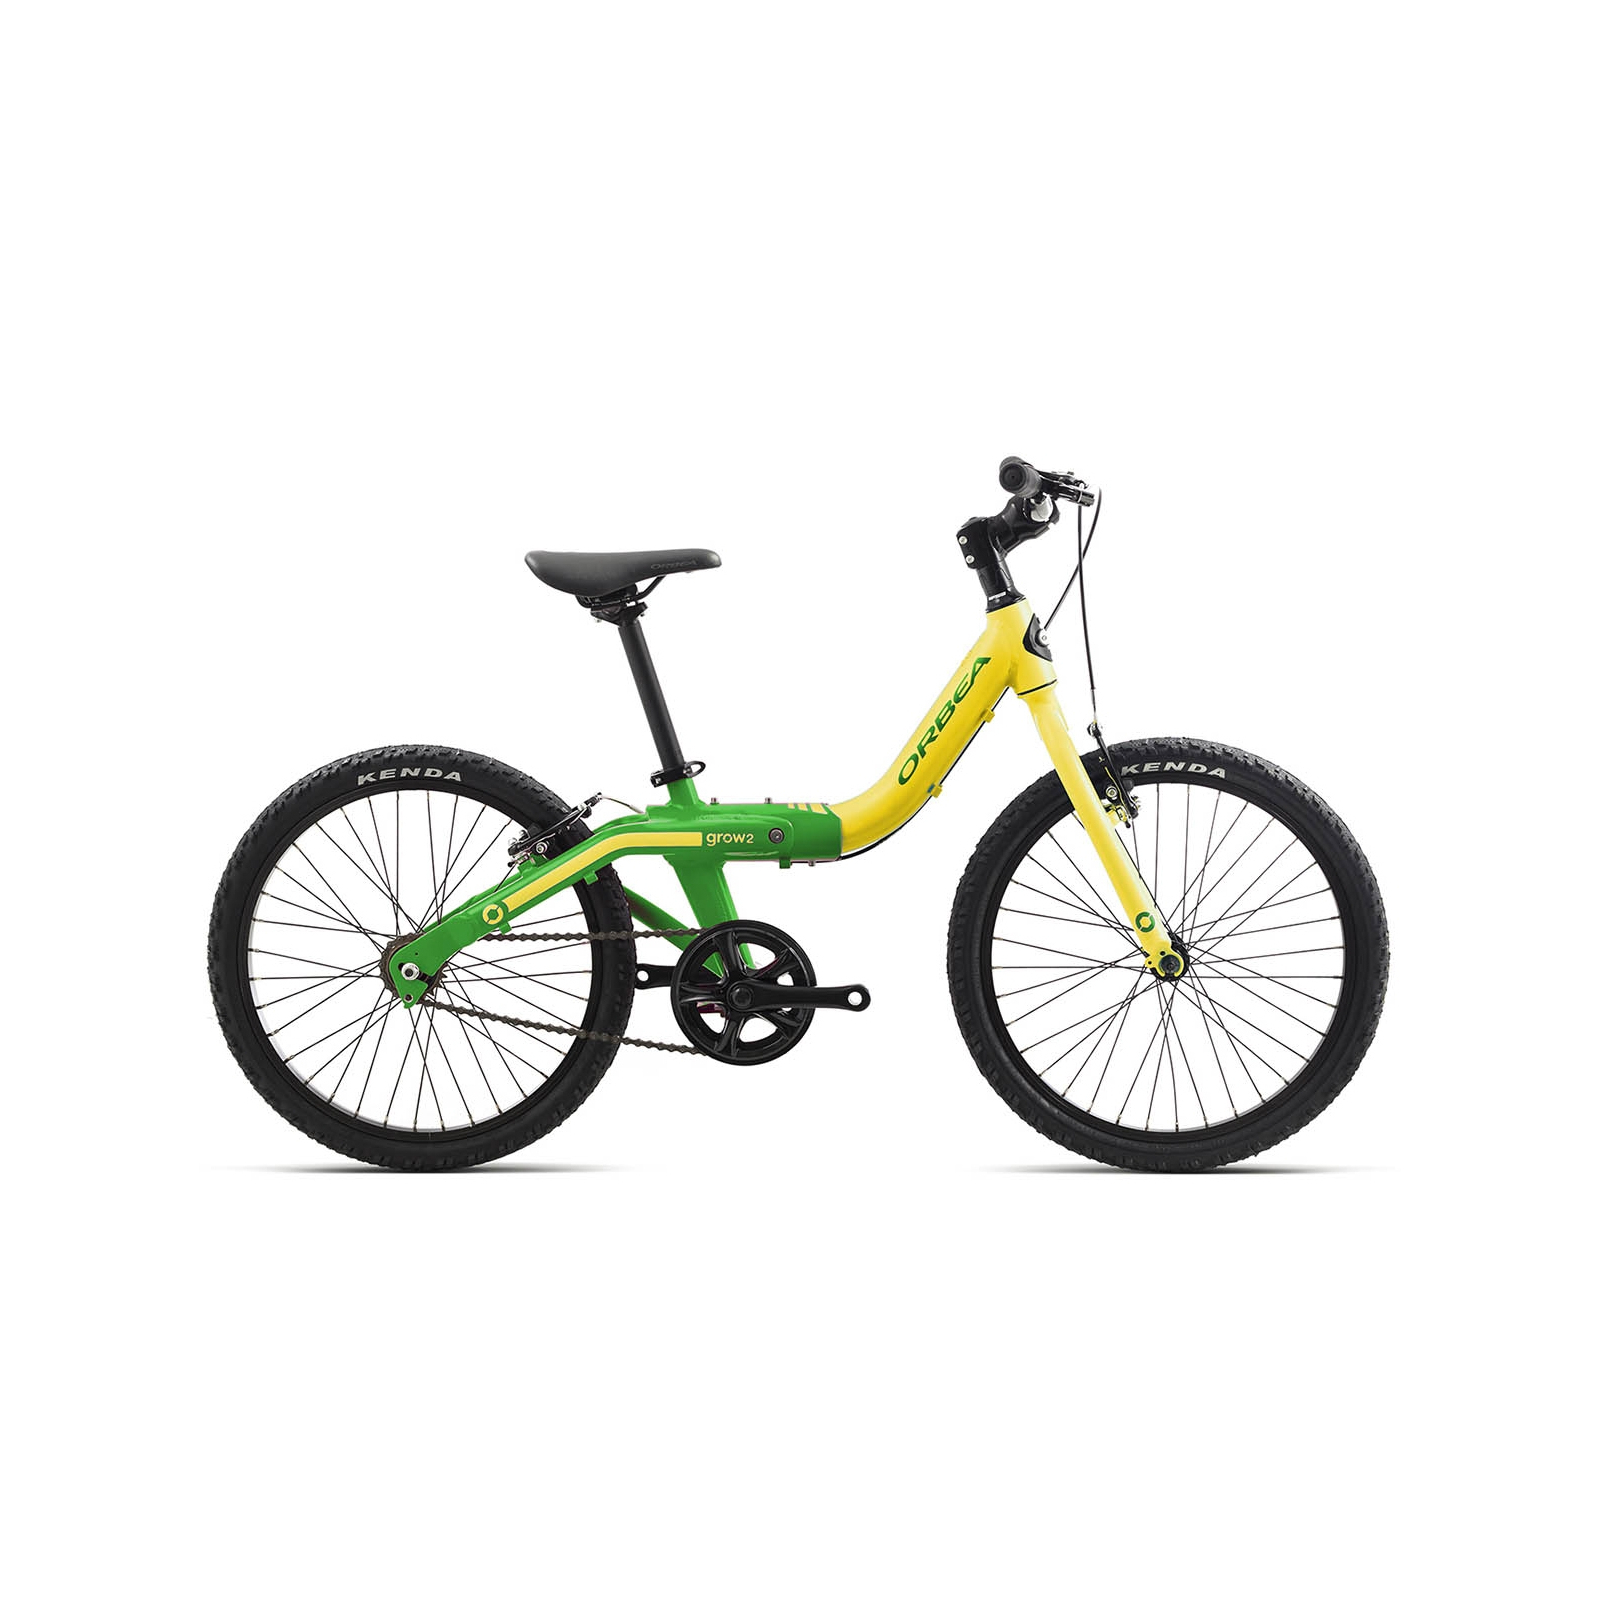 Детский велосипед Orbea Grow 2 1V 20" 2019 Pistachio - Green (J00420K7)